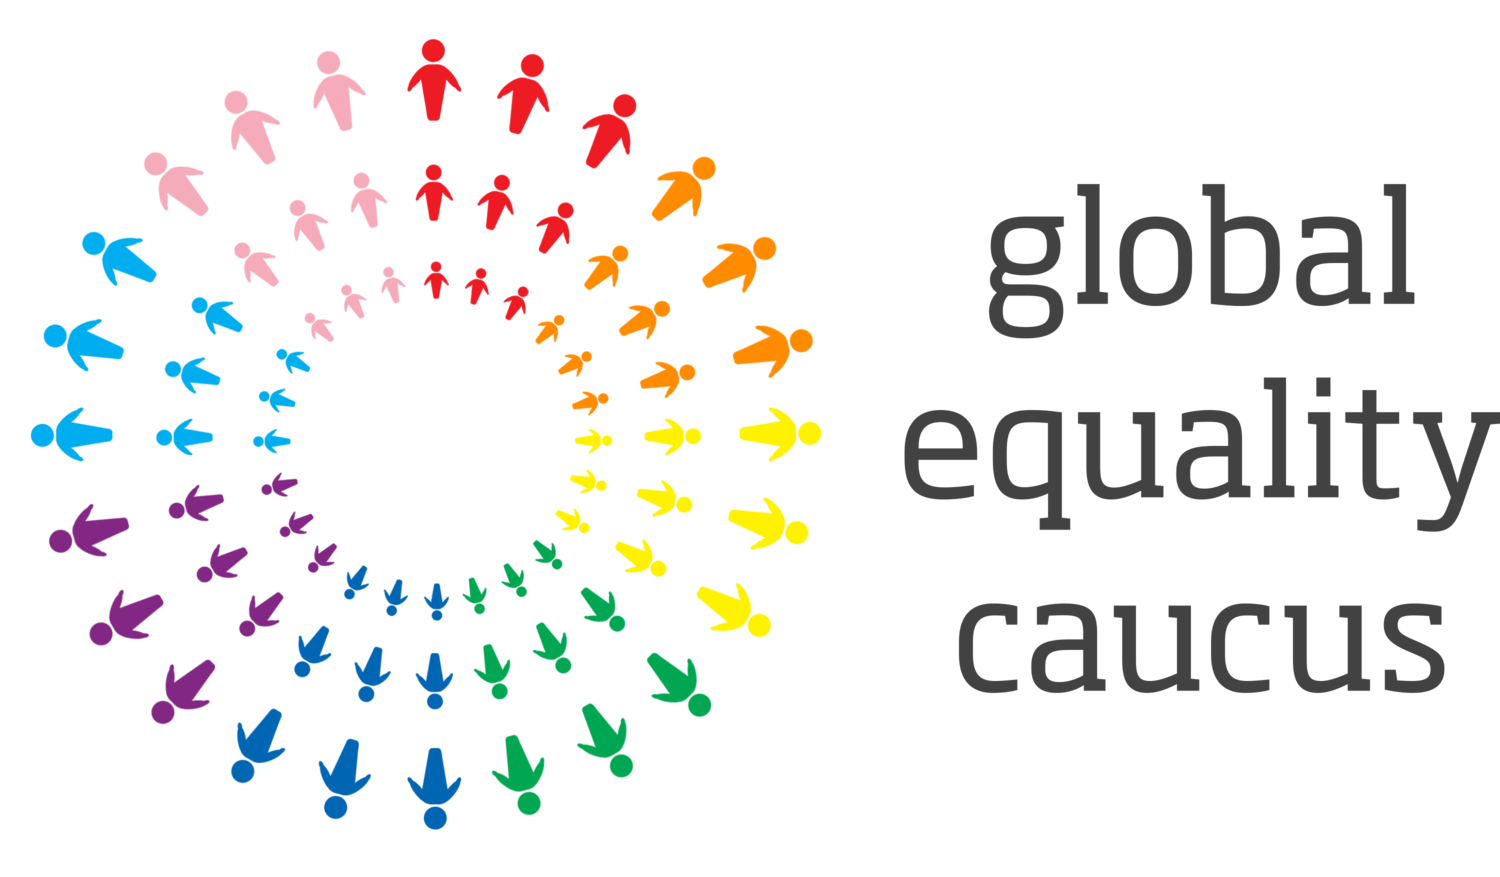 Global Equality Caucus